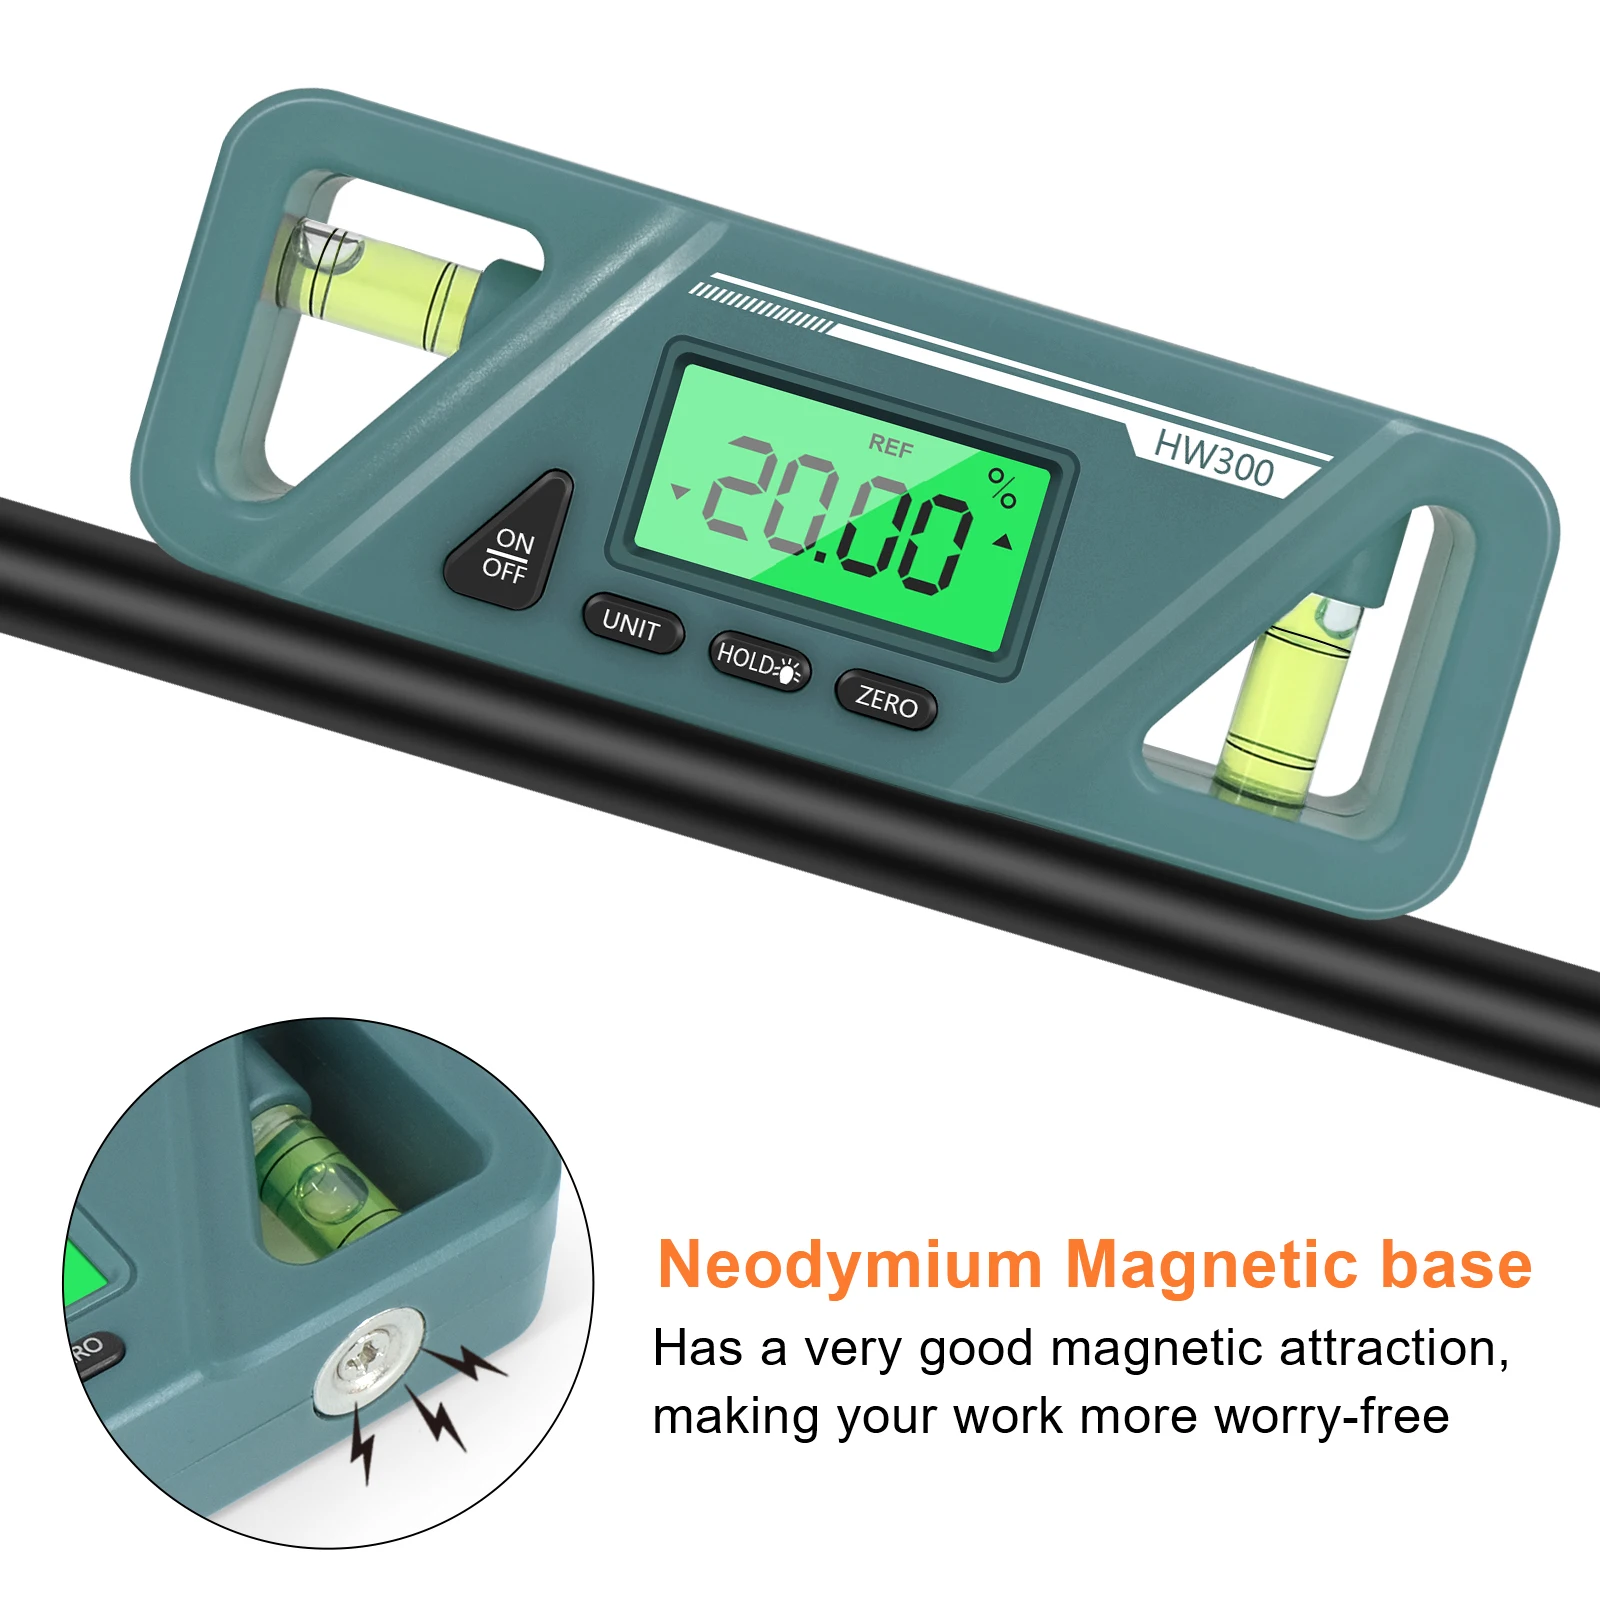 

H50 Pengukur Sudut Busur Derajat Digital Kotak Tingkat Elektronik Inclinometer dengan Alat Tukang Kayu Pengukur Sudut Gelembung